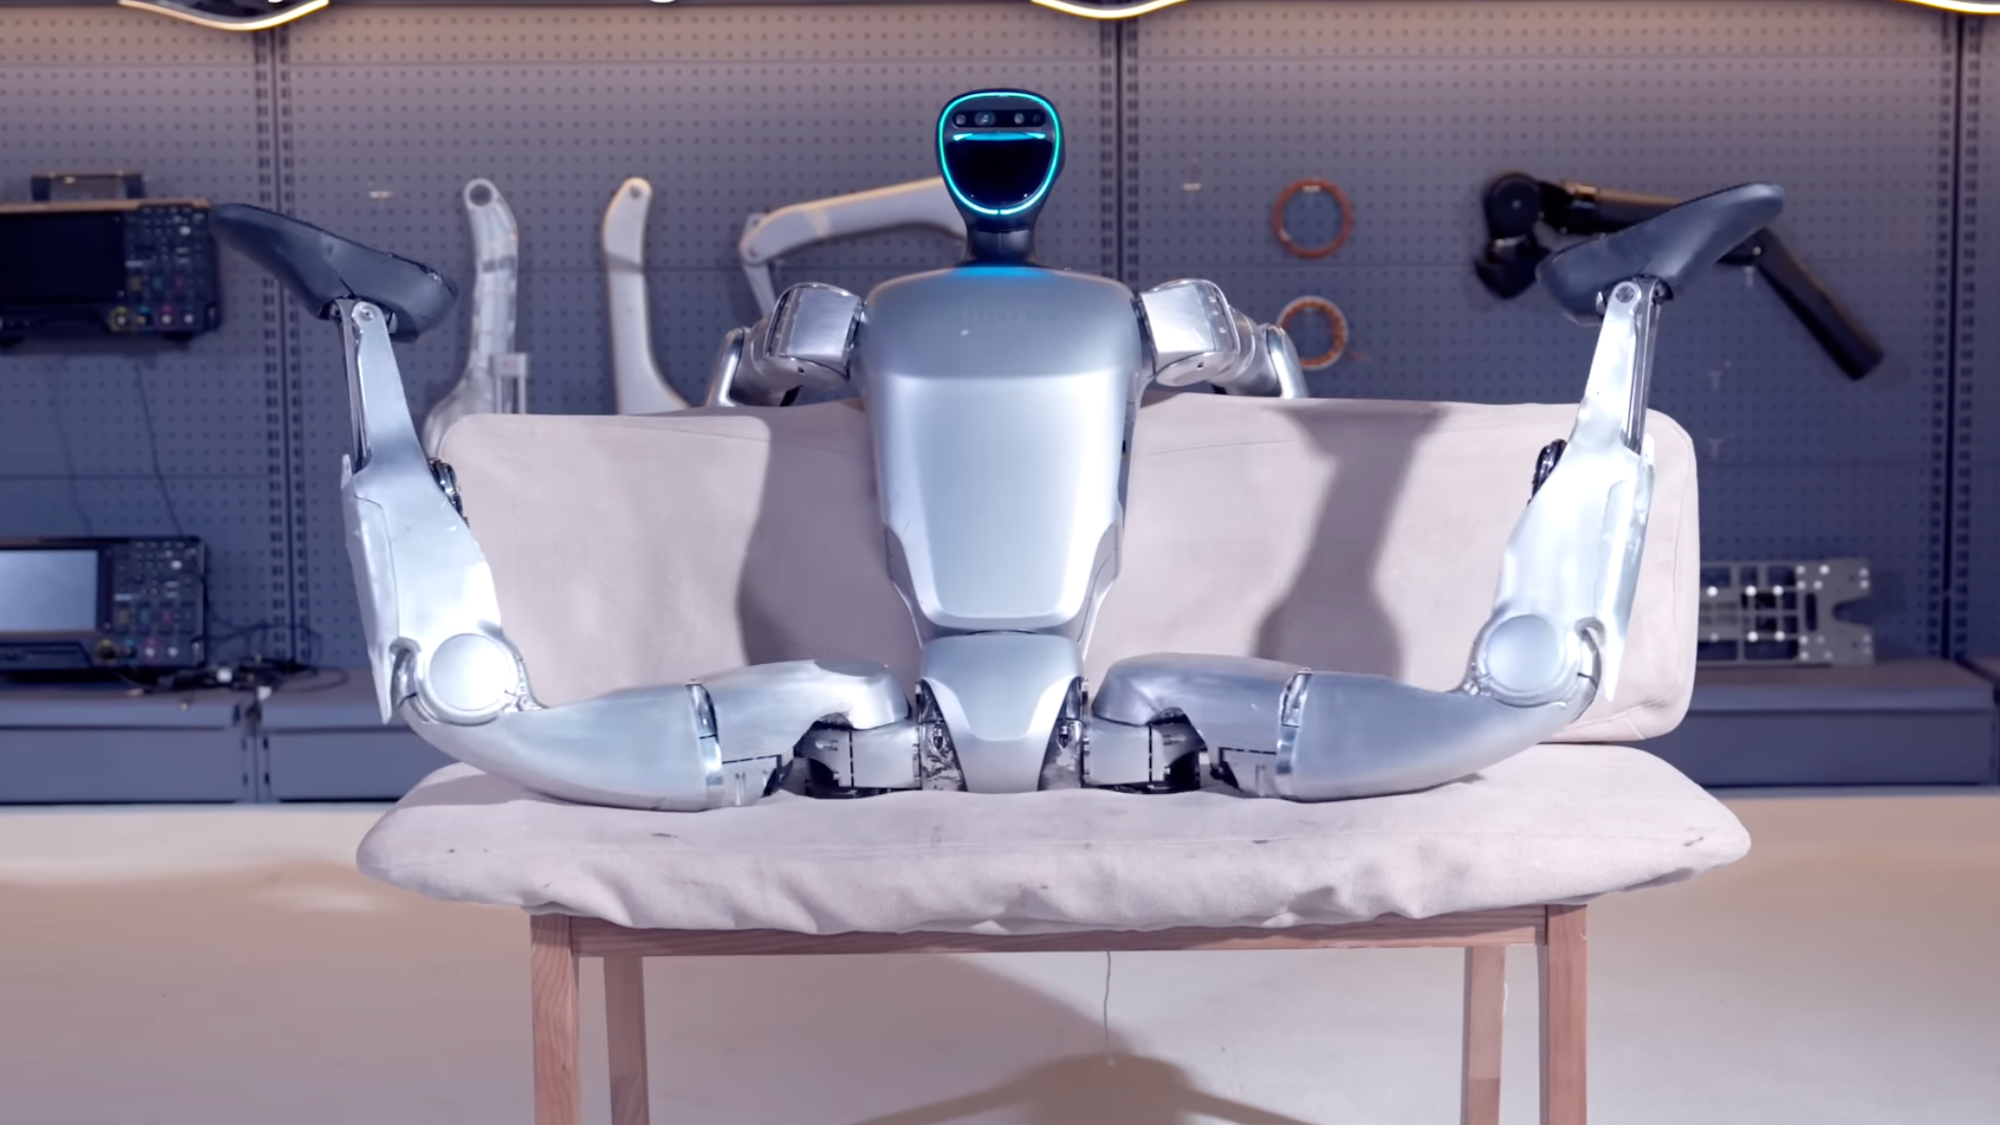 Worryingly bendy humanoid robot can crush nuts, slice Coke bottles